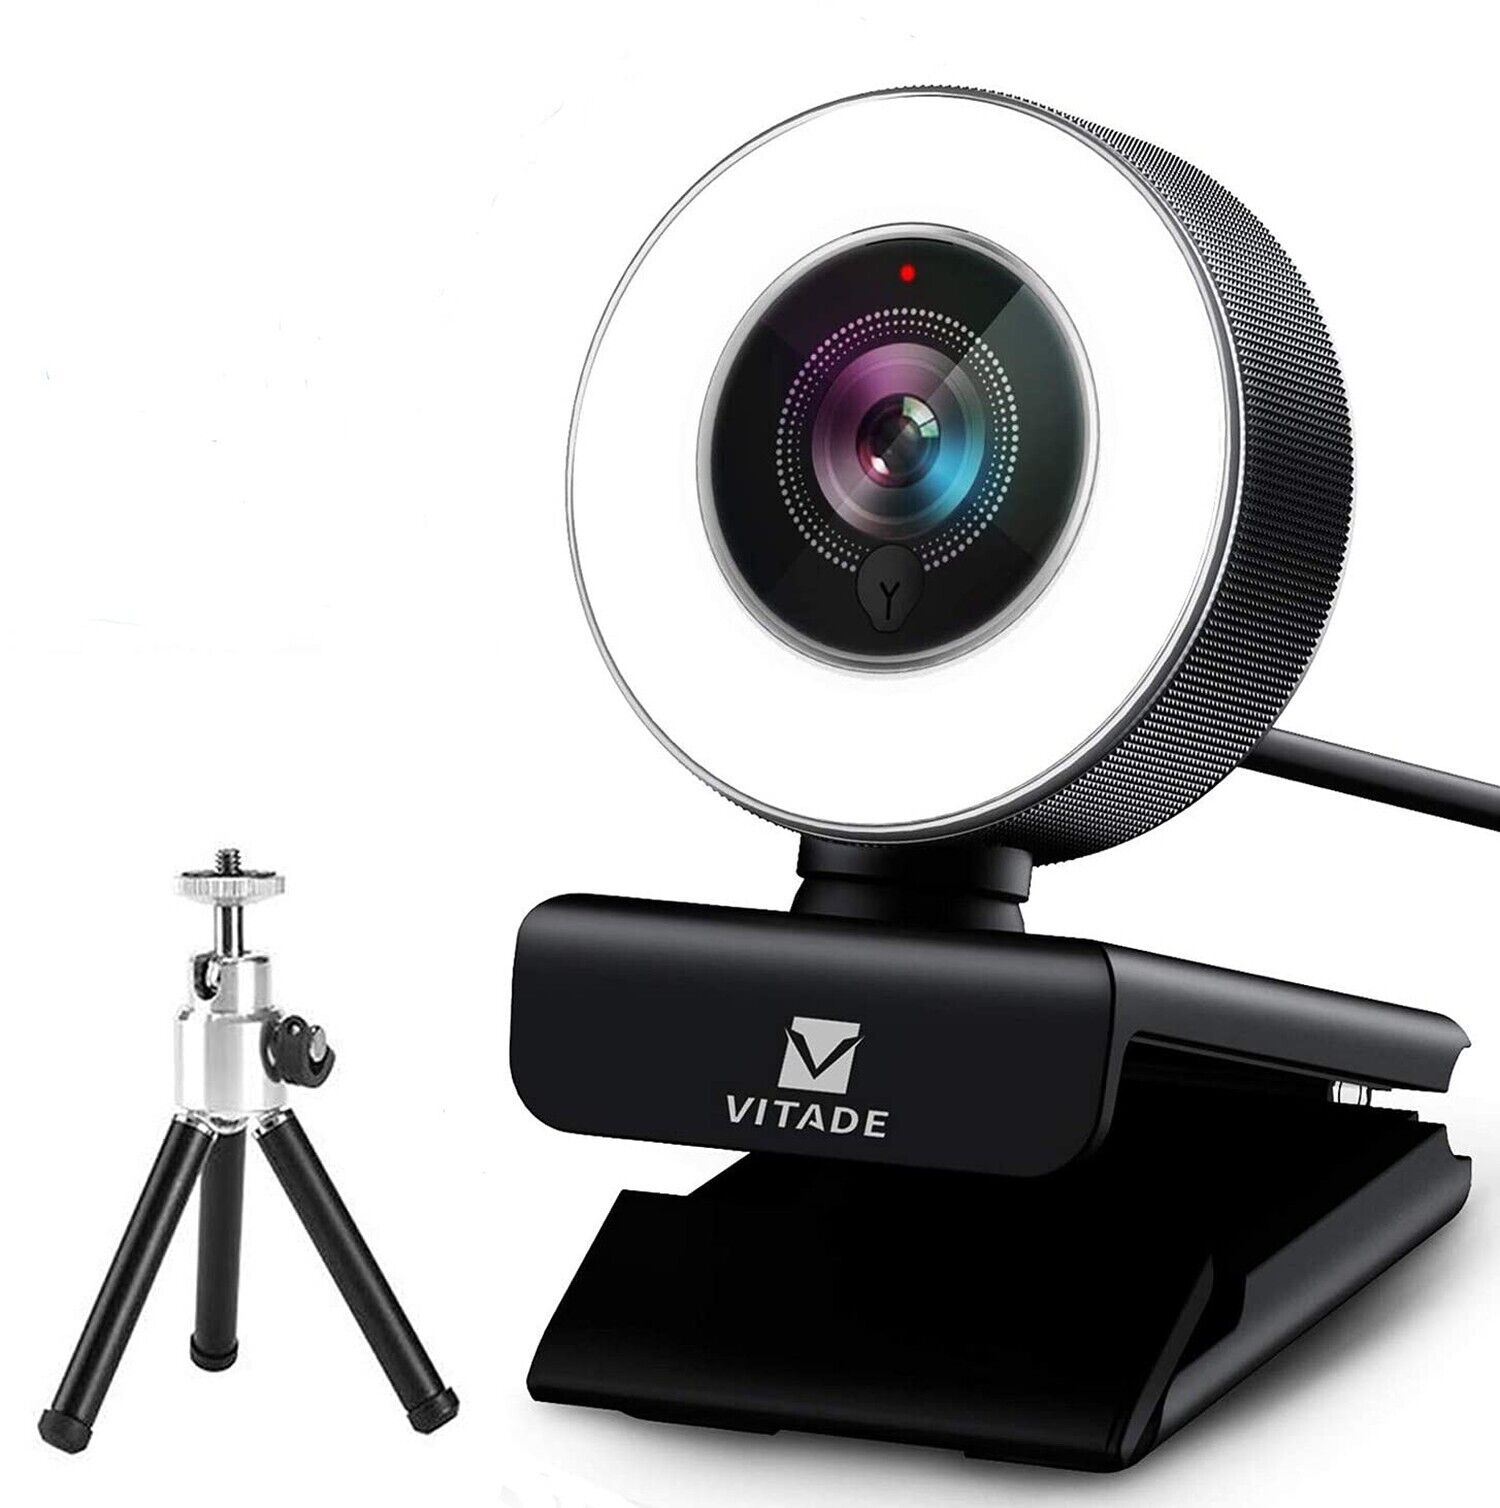 VITADE Streaming Webcam 1080P, 960A HD Web Camera USB Web Cam for Gaming Conf...